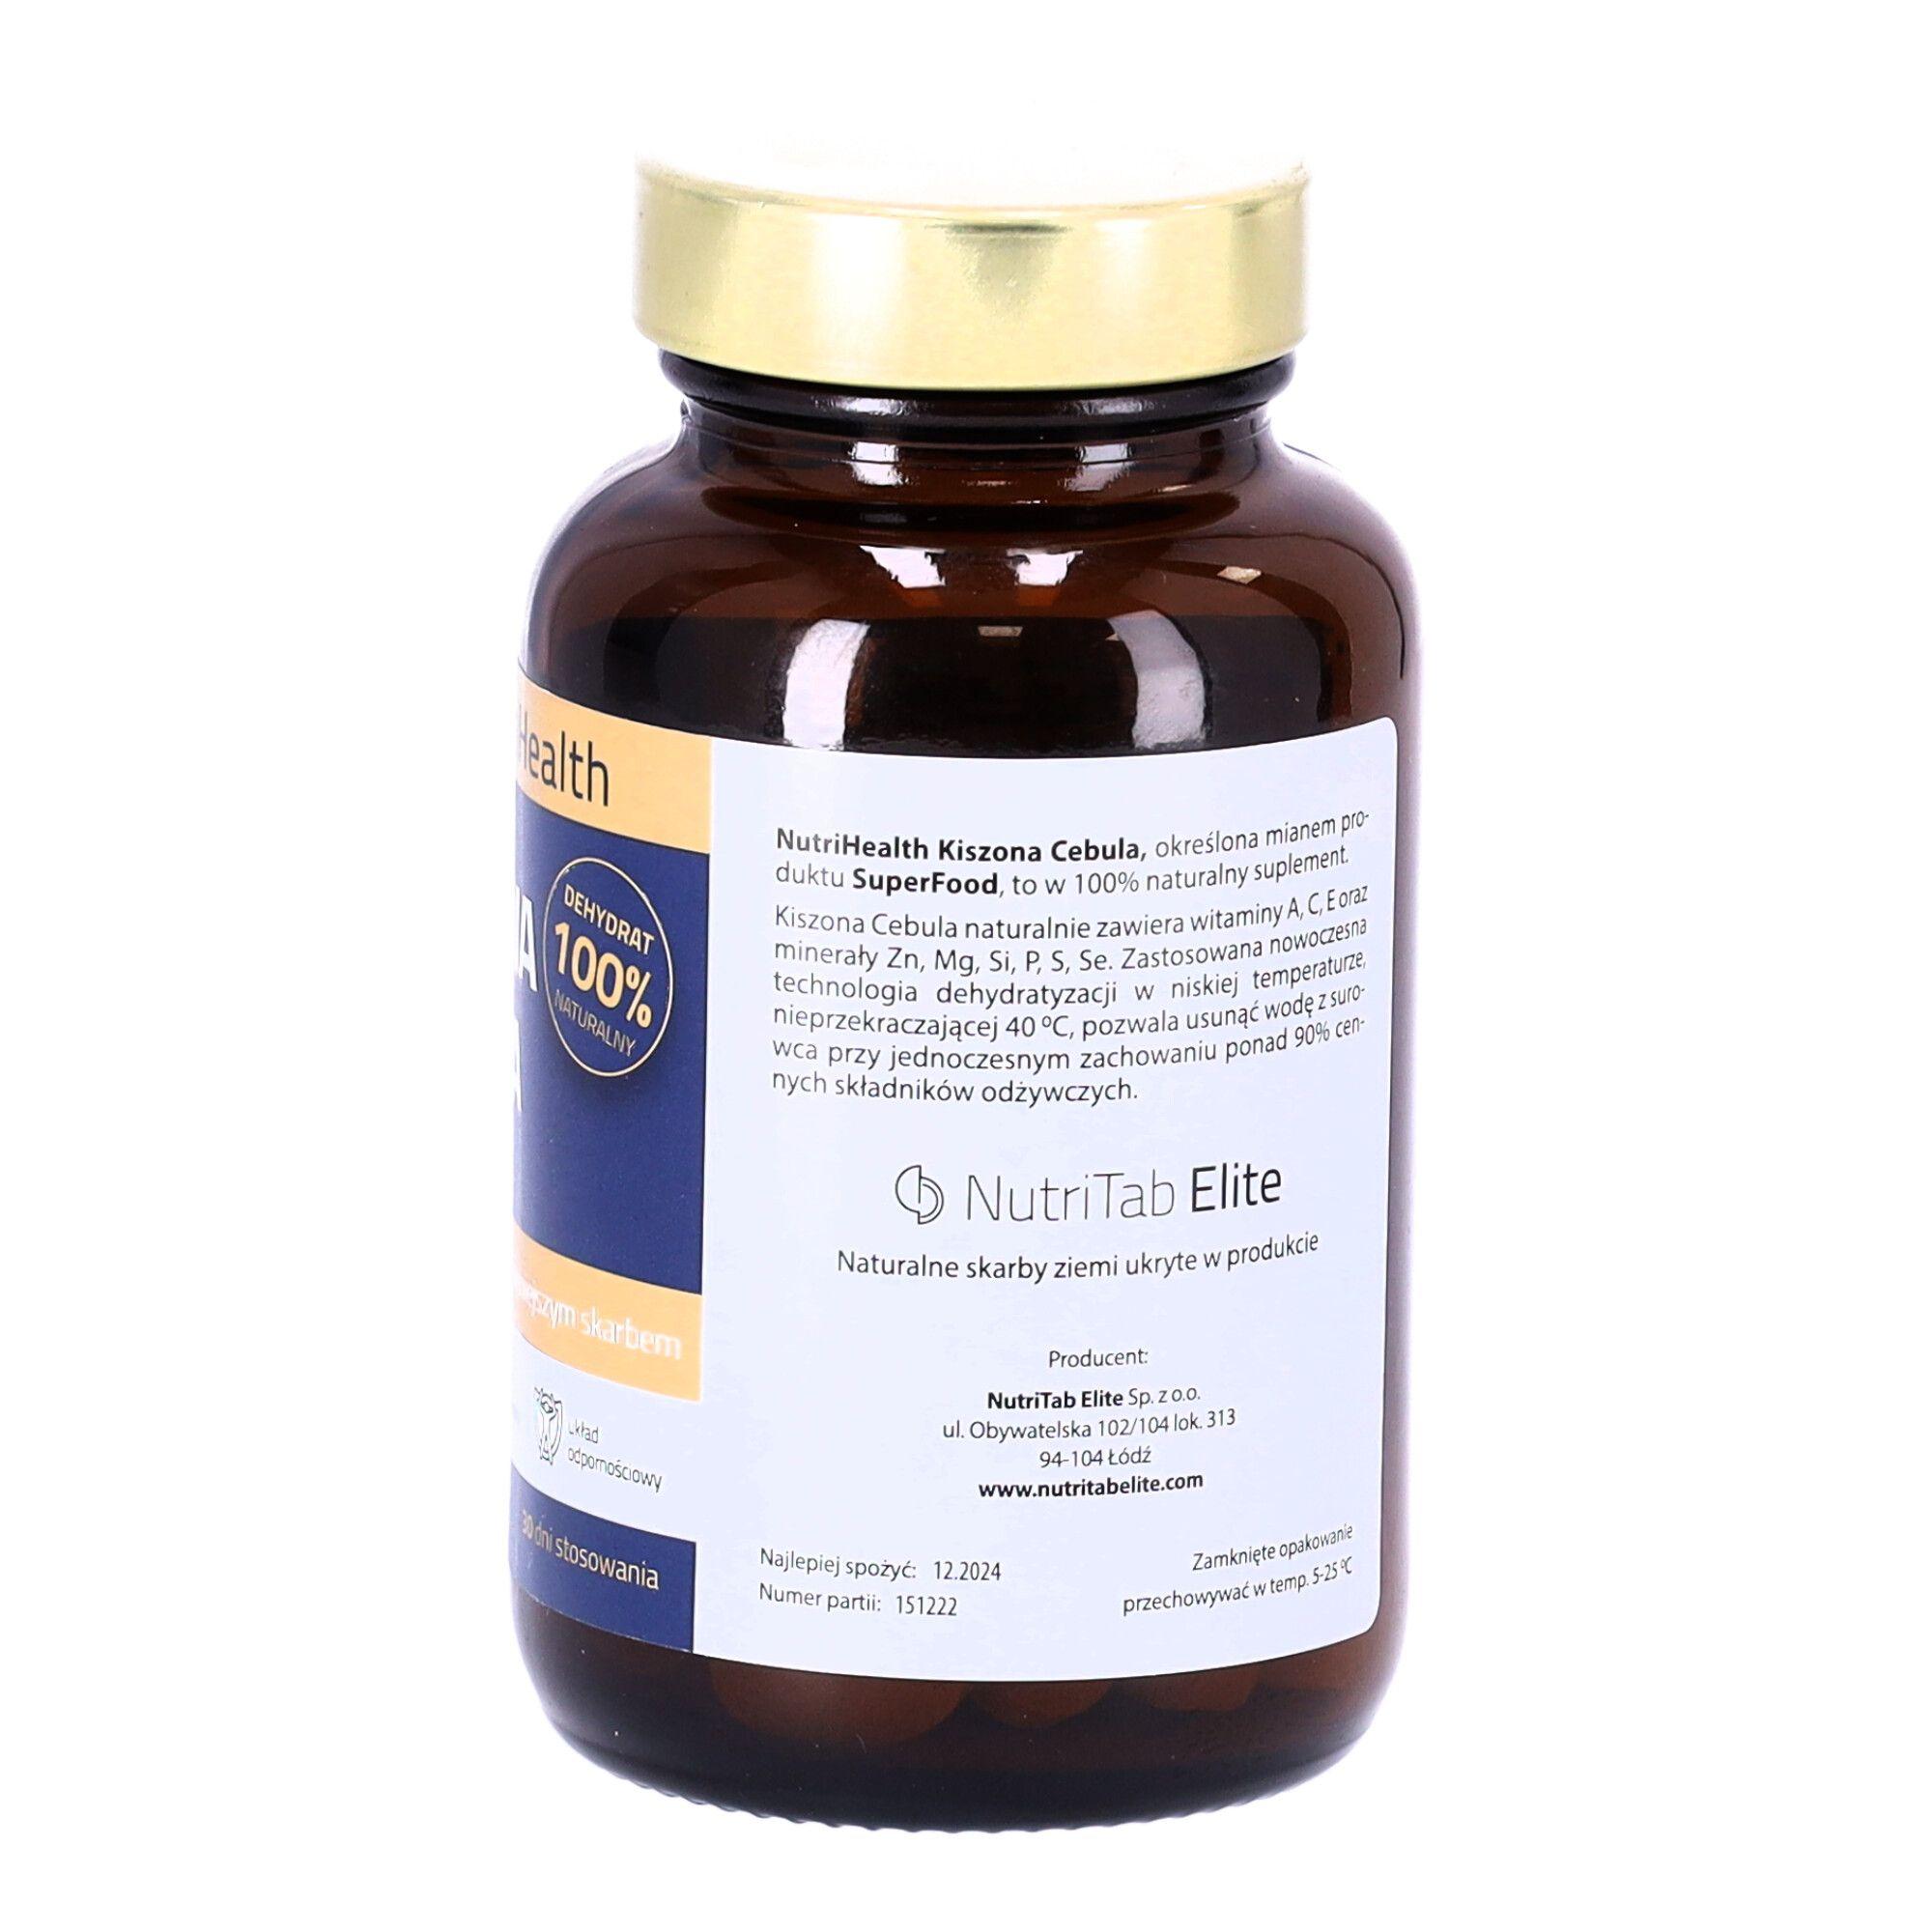 Suplement diety NutriHealth KISZONA CEBULA, (60 kapsułek) 100% naturalny